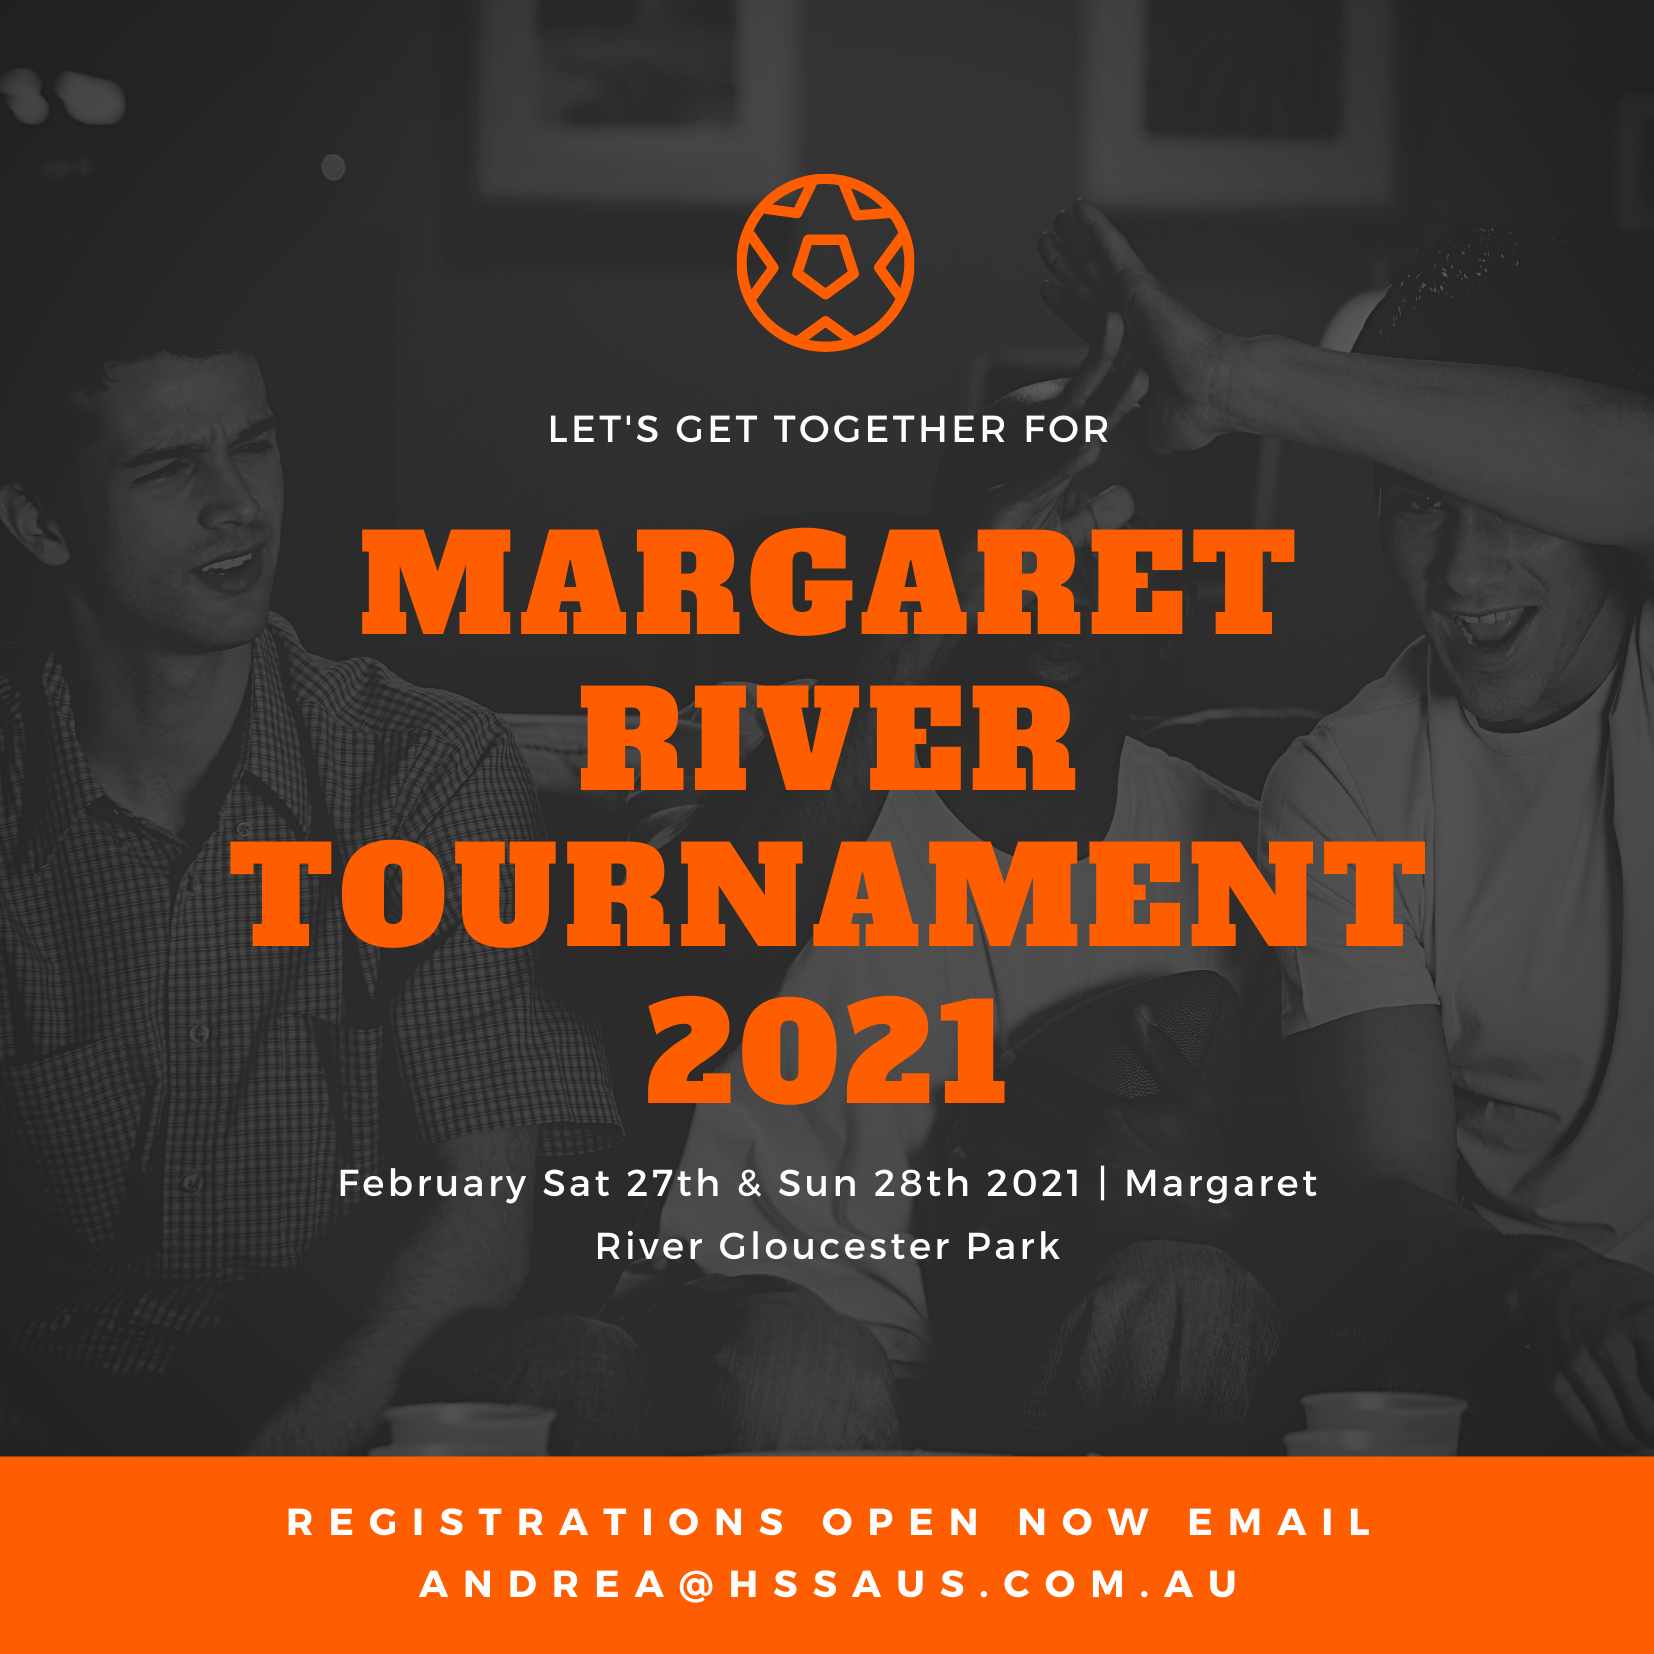 Margaret River Tournament 2021